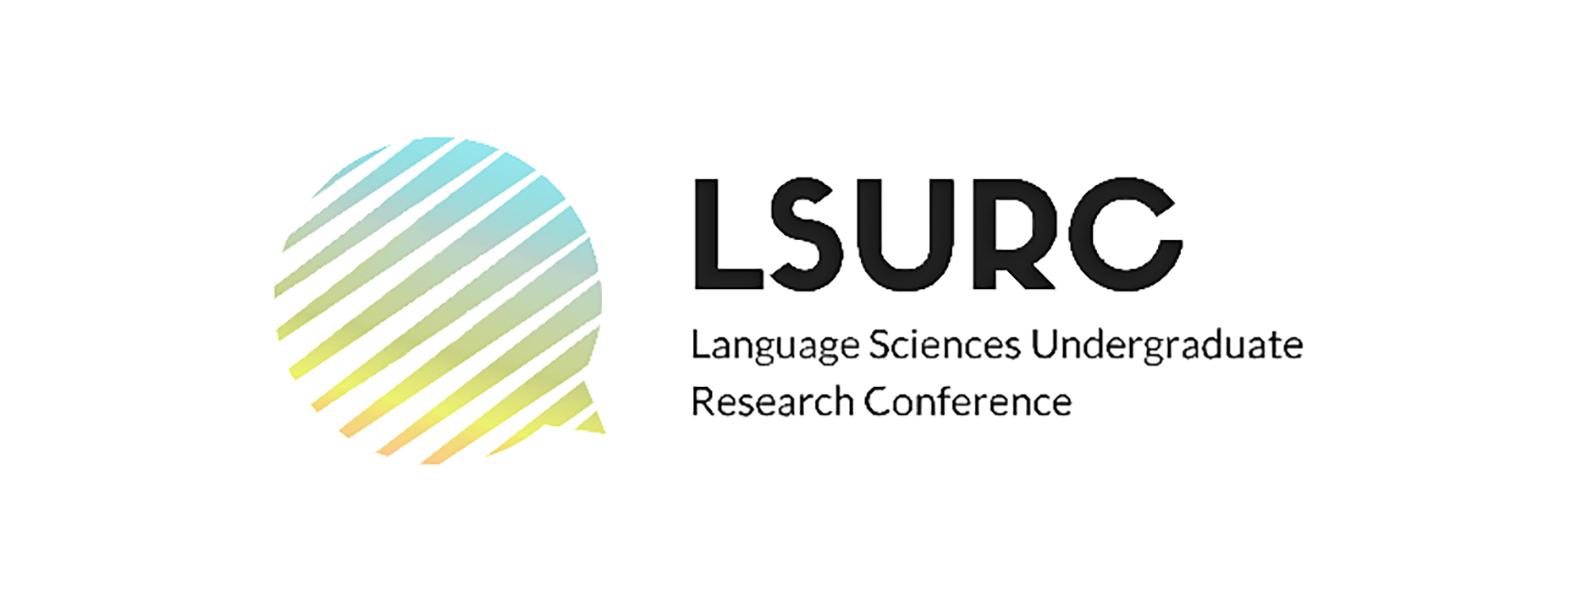 An image of the LSURC logo, a multicoloured speech bubble